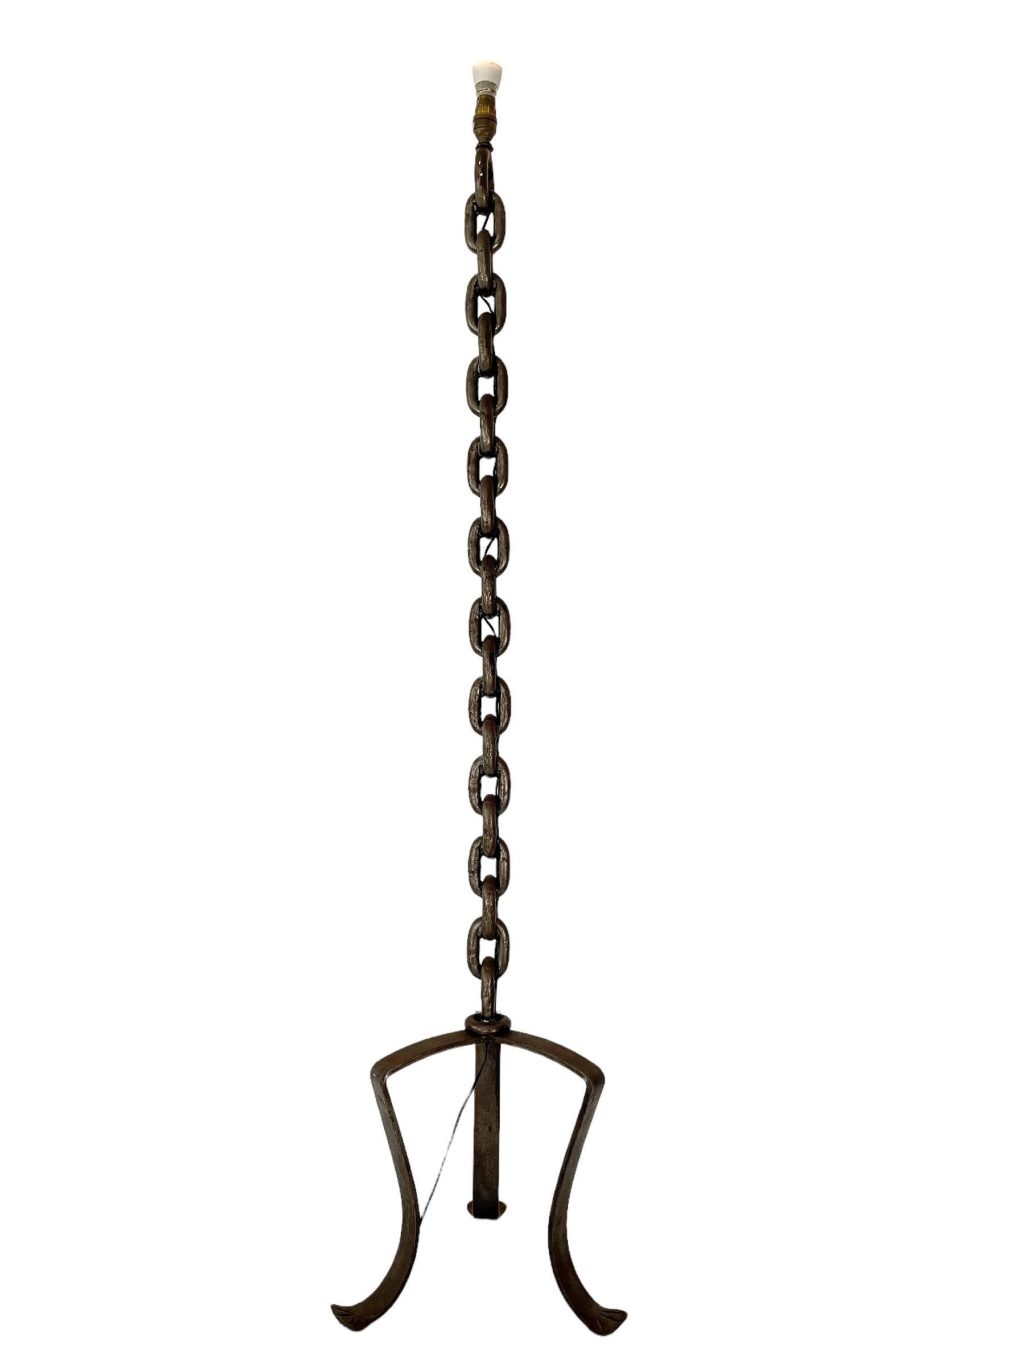 Vintage French Large Rusty Iron Chain Chains Light Lantern Lamp Decor Design Floor Standing Design Designer c1960-70’s / EVE de France